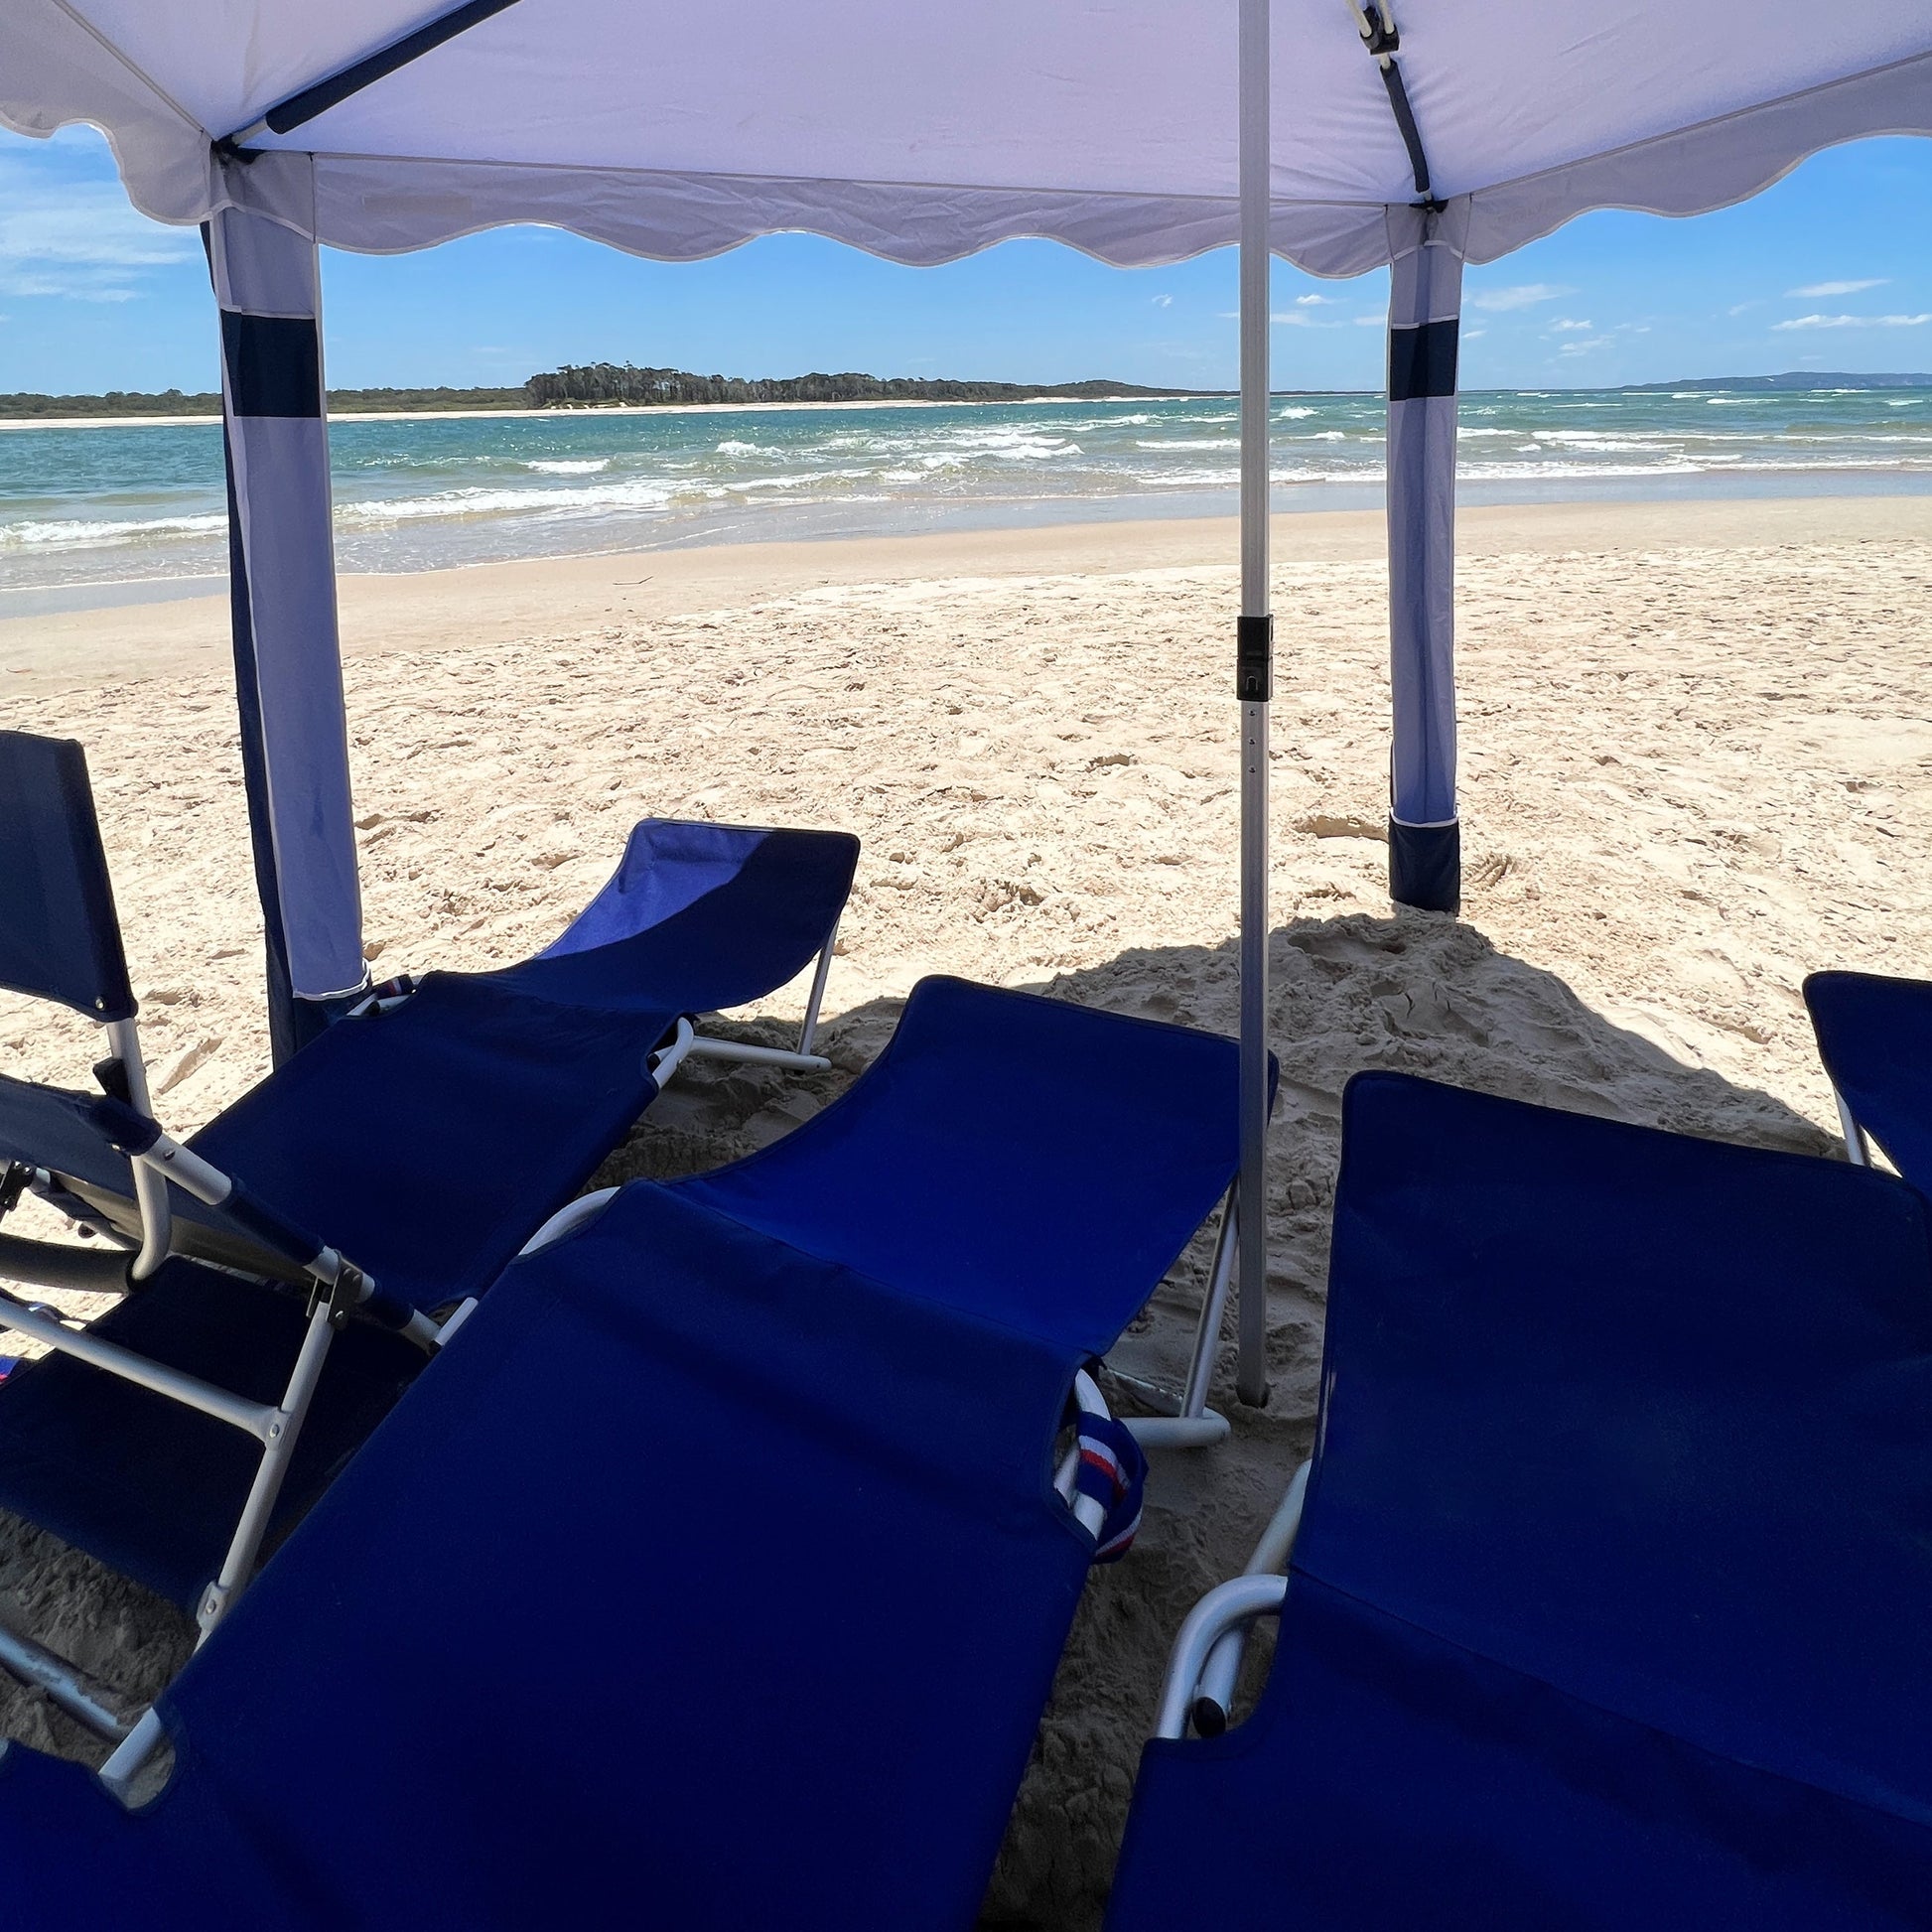 premium beach cabana coolcabana navy with white trim interior shot of coolcabana on the beach#color_burleigh